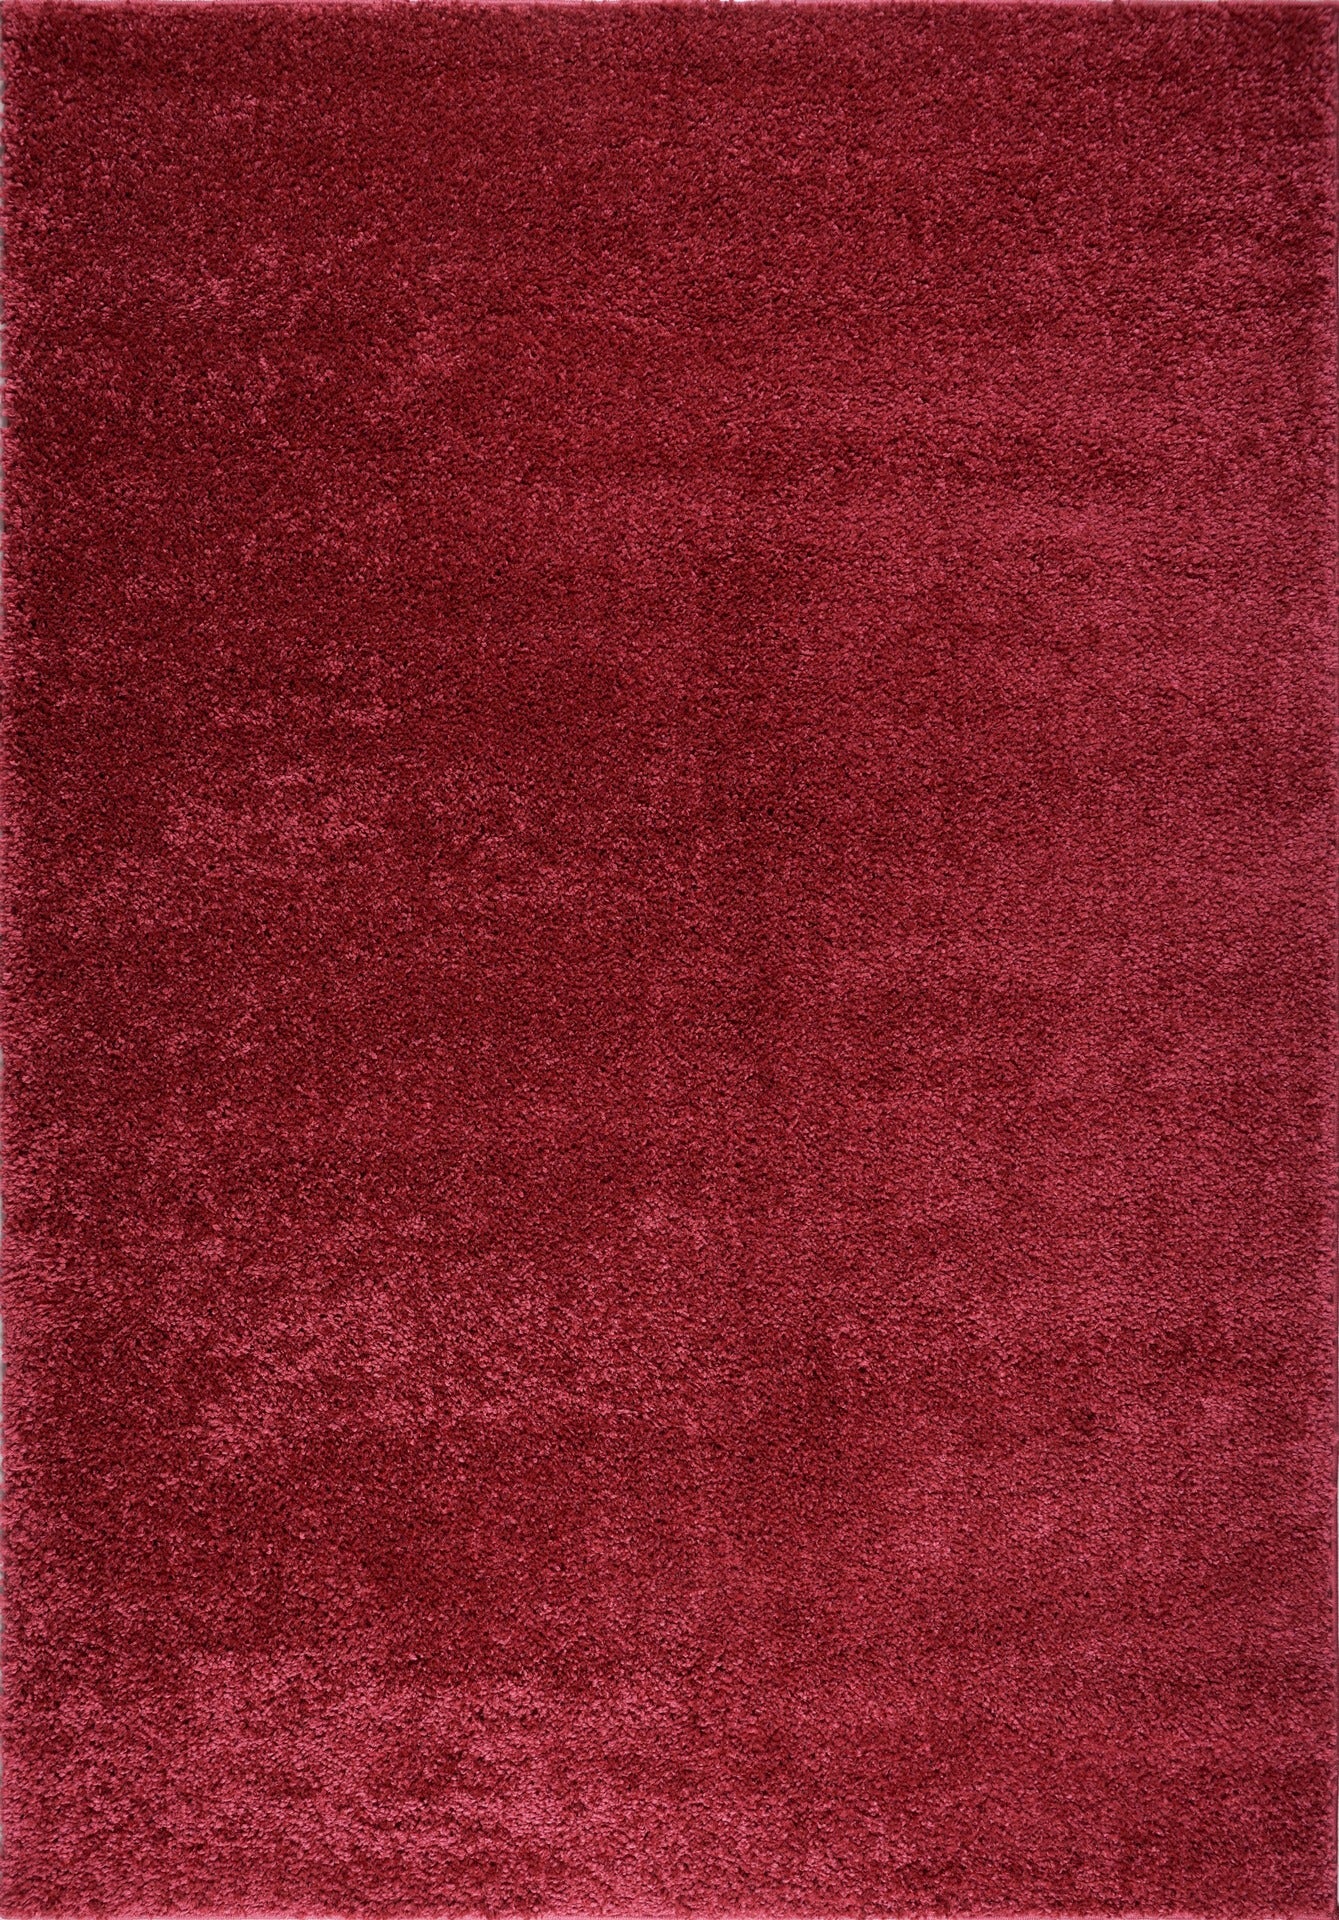 ladole rugs solid rose red shaggy meknes durable medium pile indoor area rug carpet 8x11 710 x 105 240cm x 320cm 2x3 Doormat, Entrance, Balcony, Bathroom, Washroom